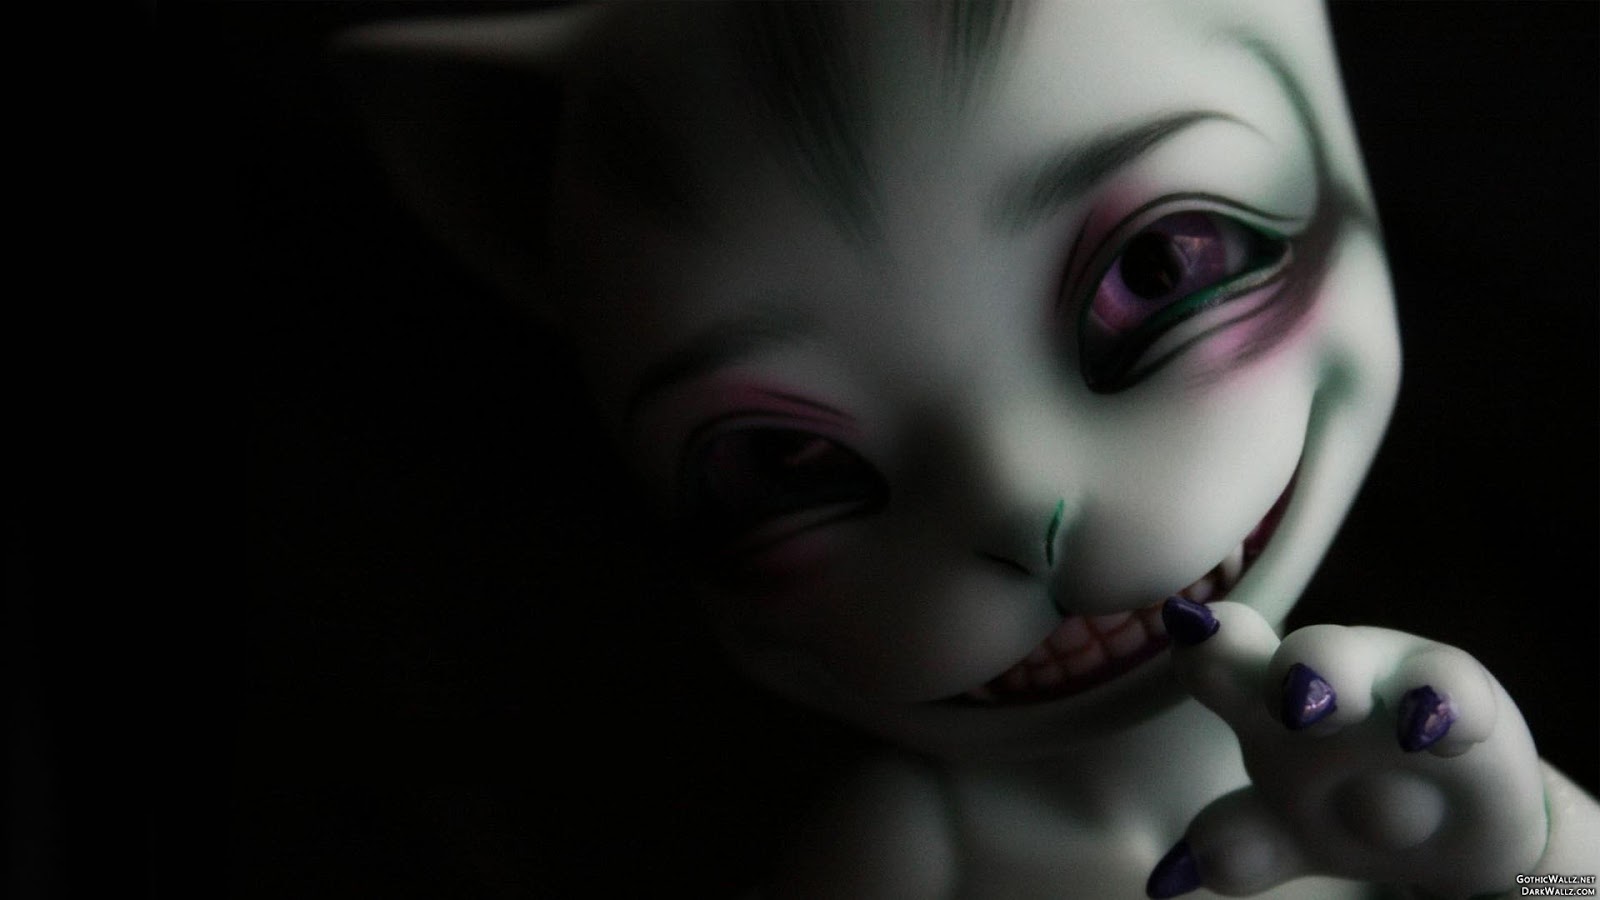  Scary weird creepy creature | Dark Gothic Wallpaper Download